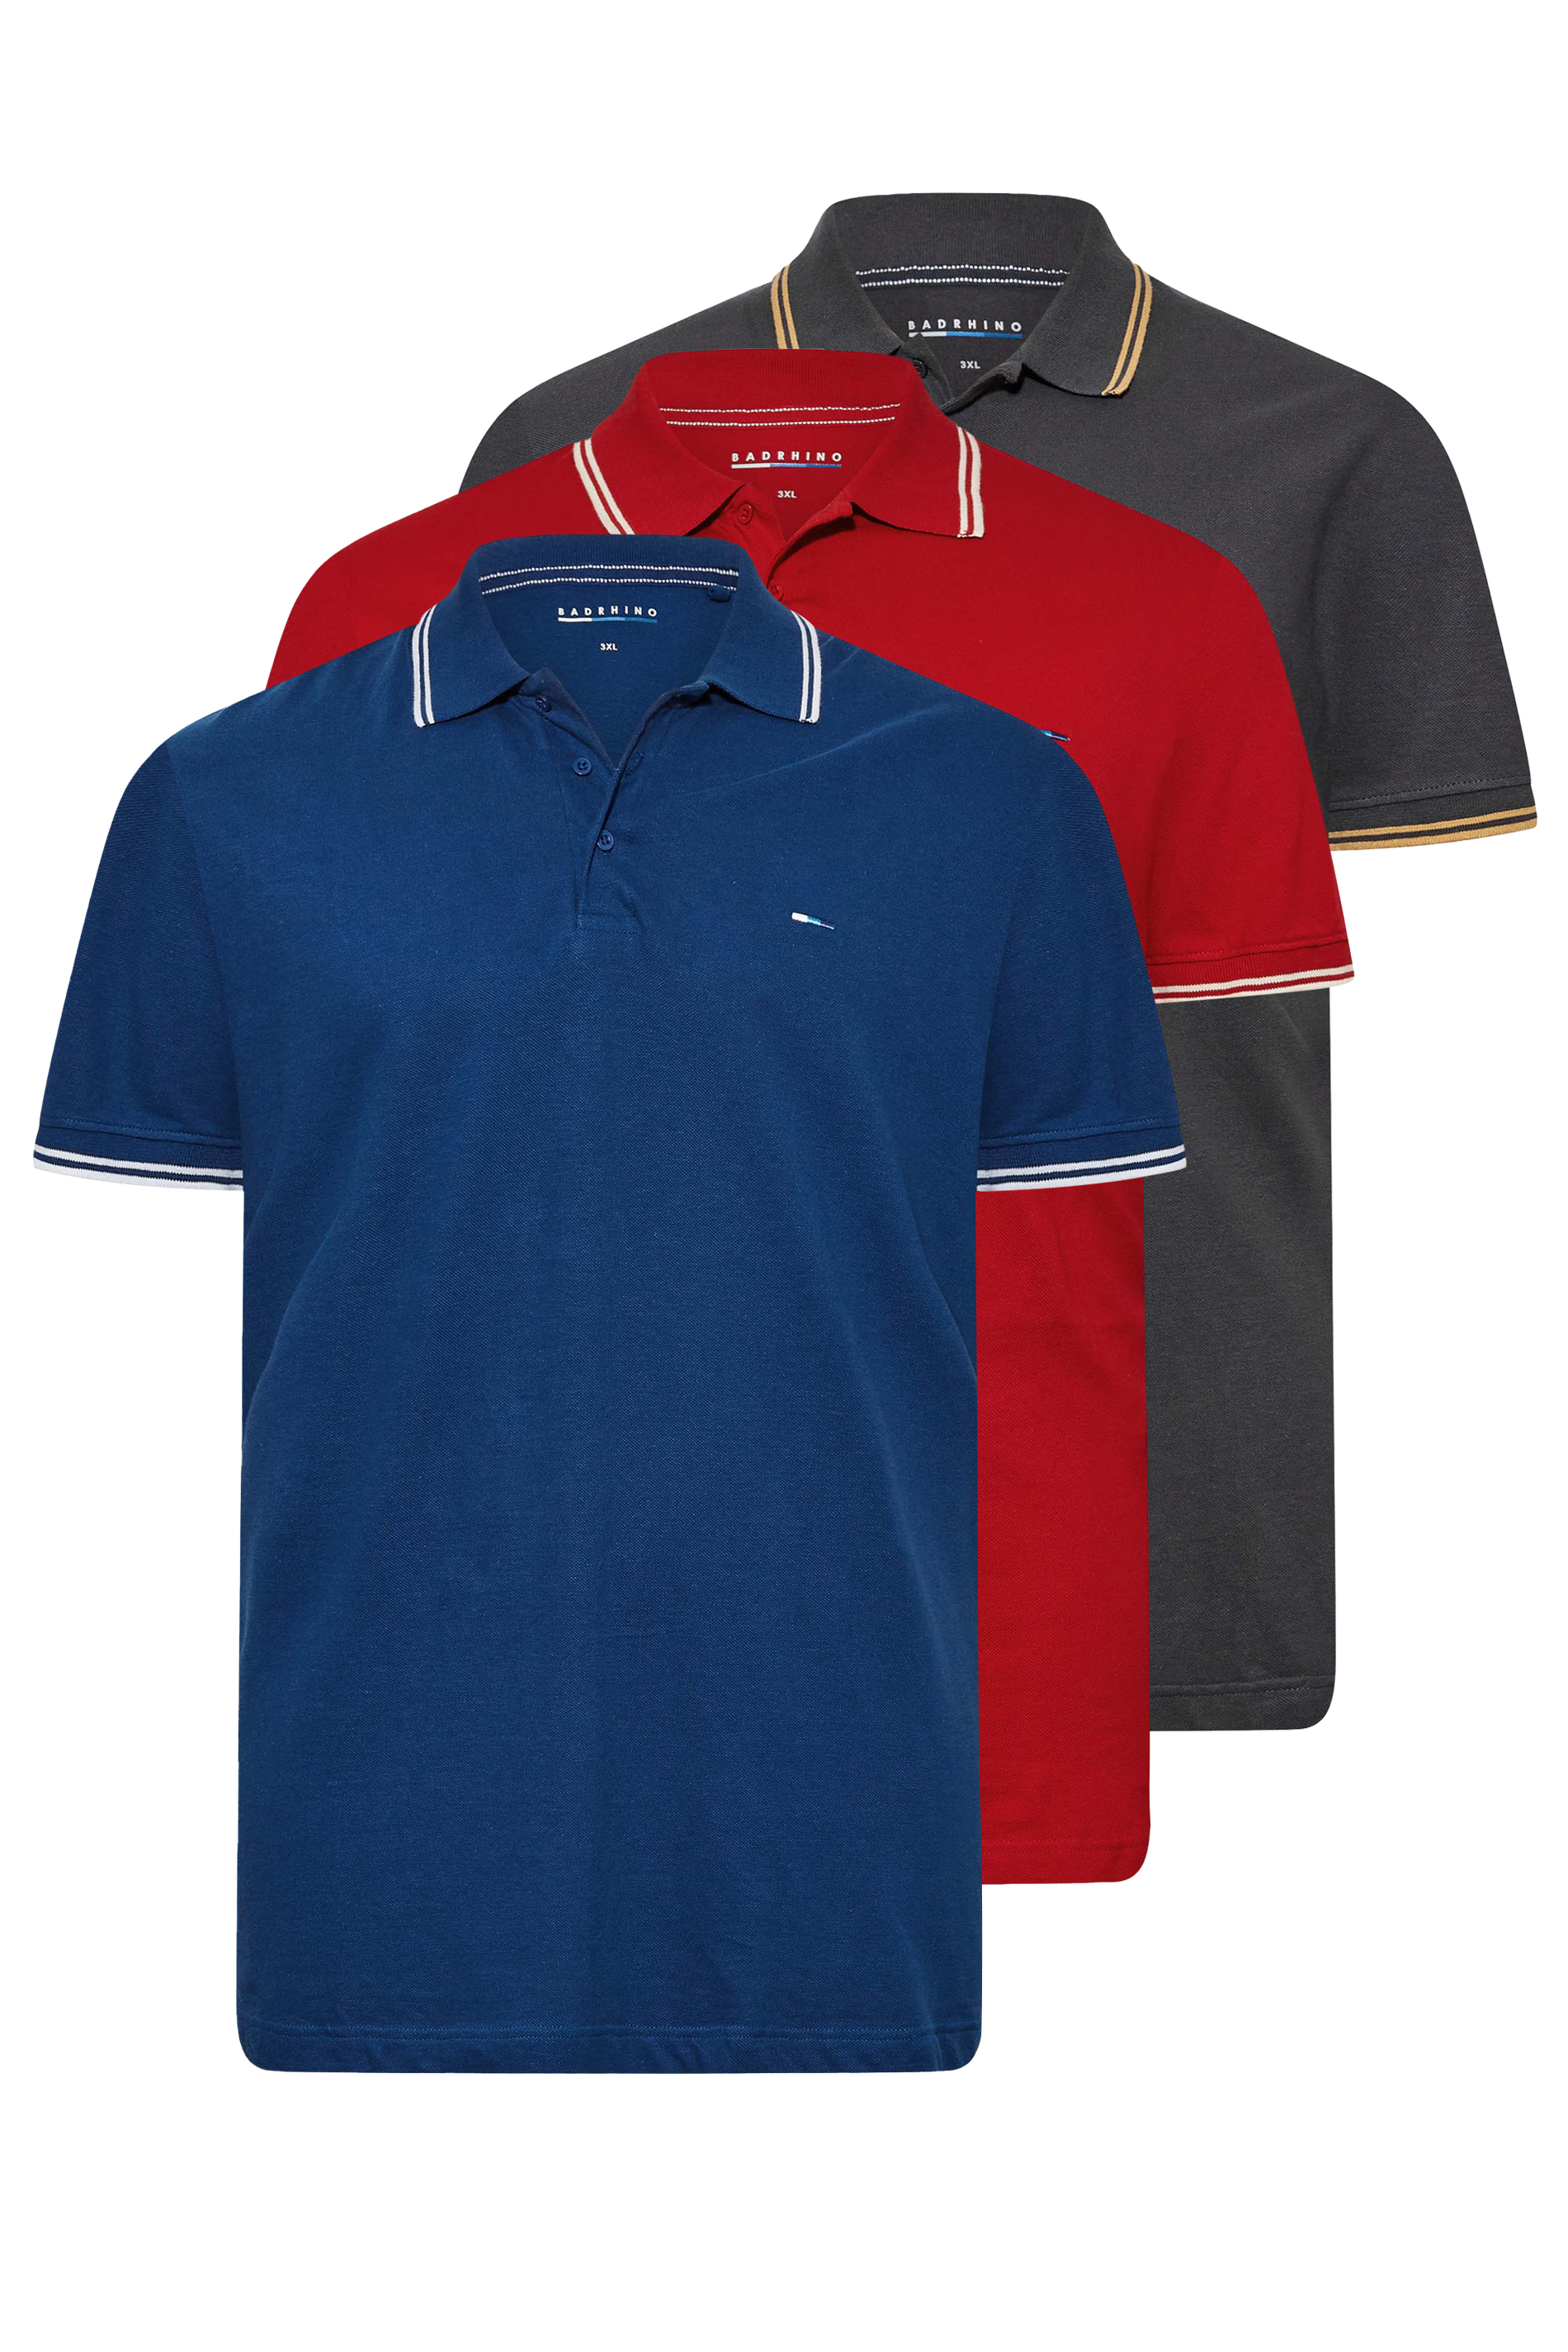 BadRhino Blue & Red 3 Pack Essential Tipped Polo Shirts | BadRhino 3